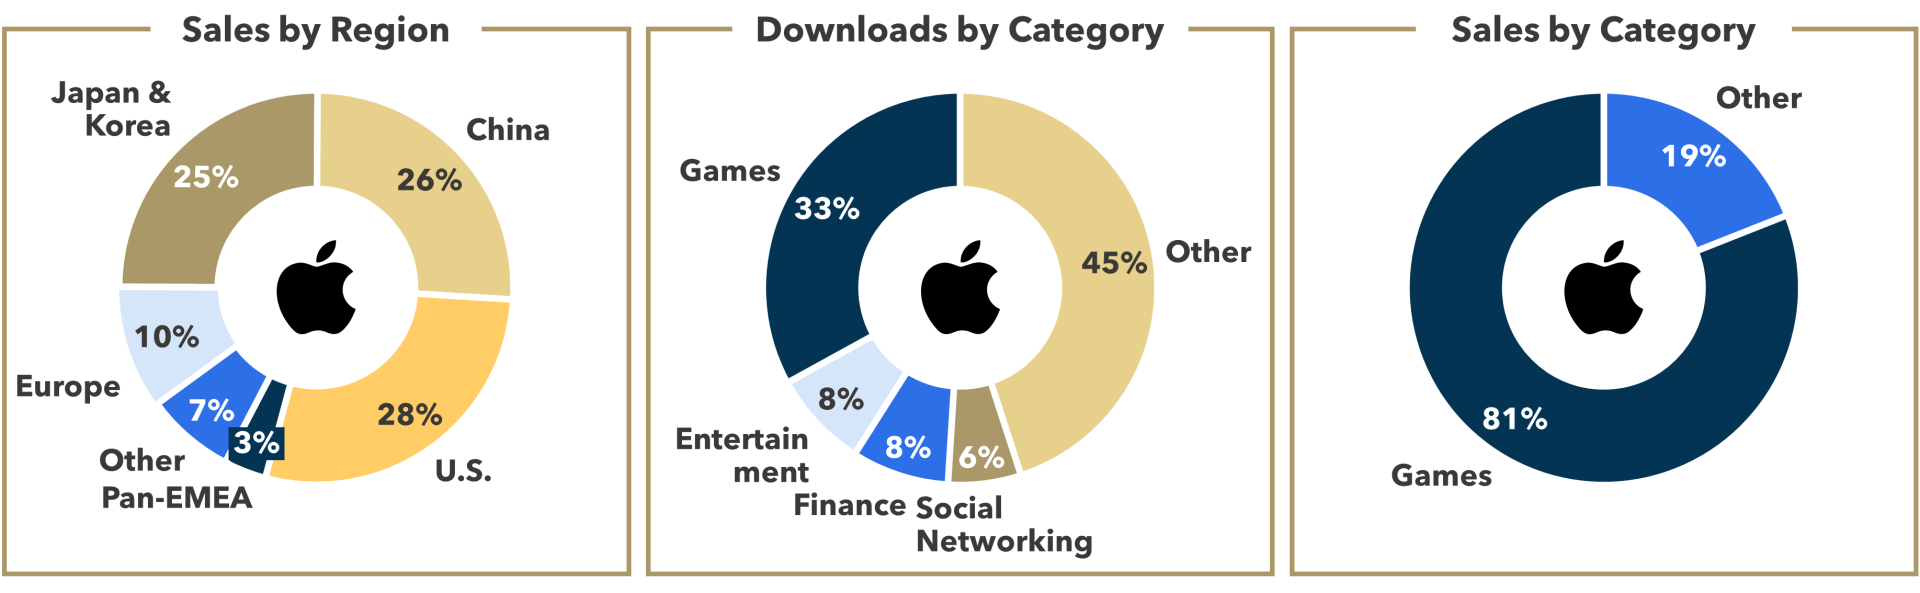 FIGURE 8: App Store Sales